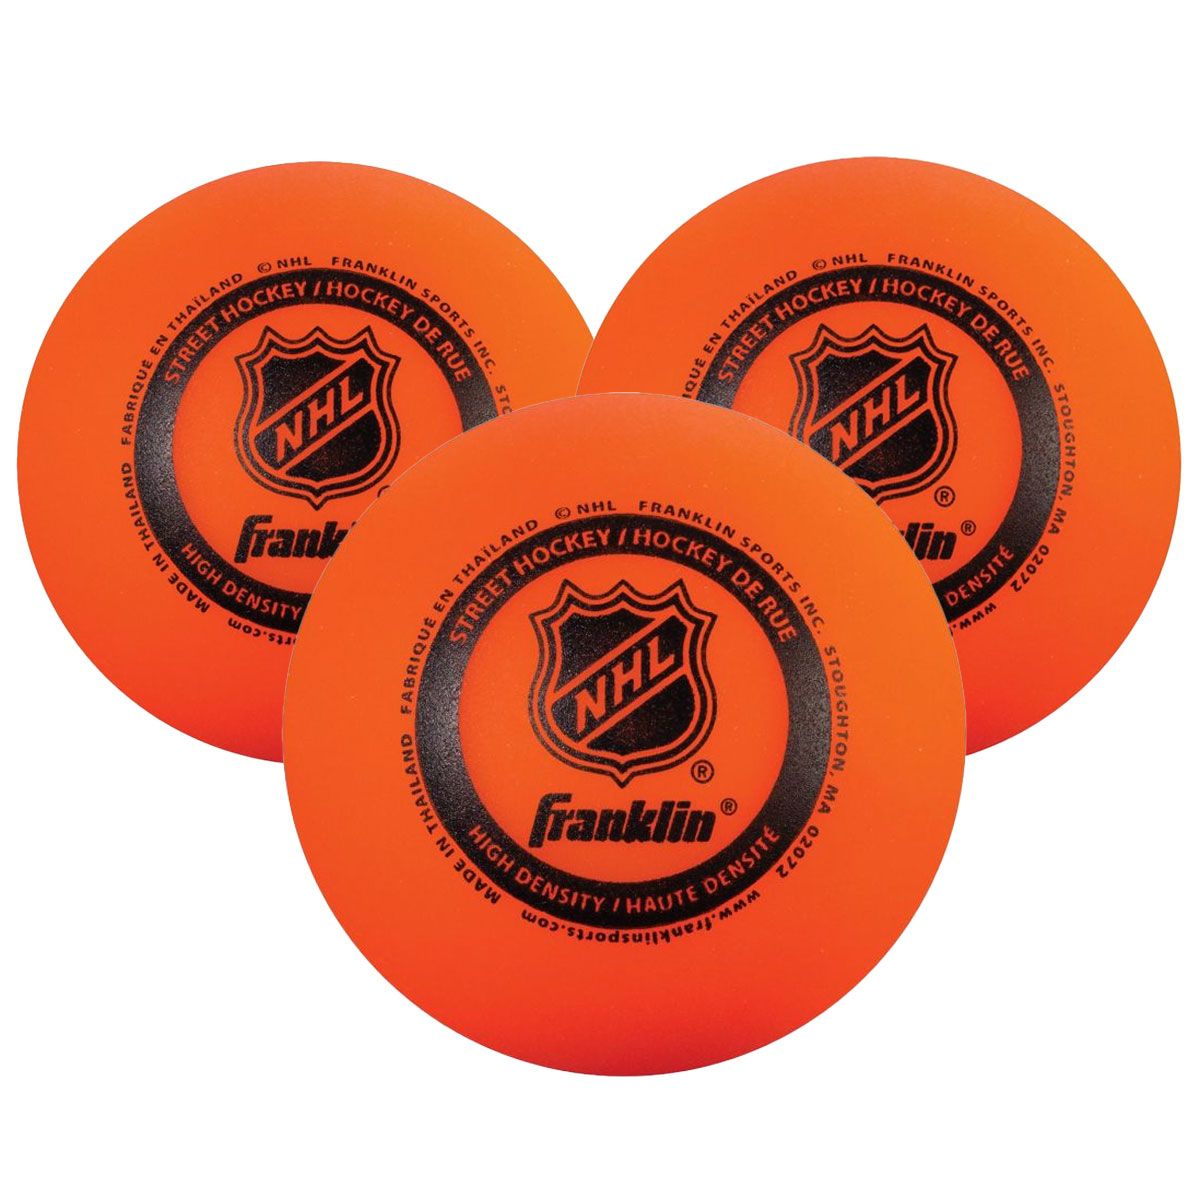 Officially Licensed NHL Street Hockey Balls 3 Pack